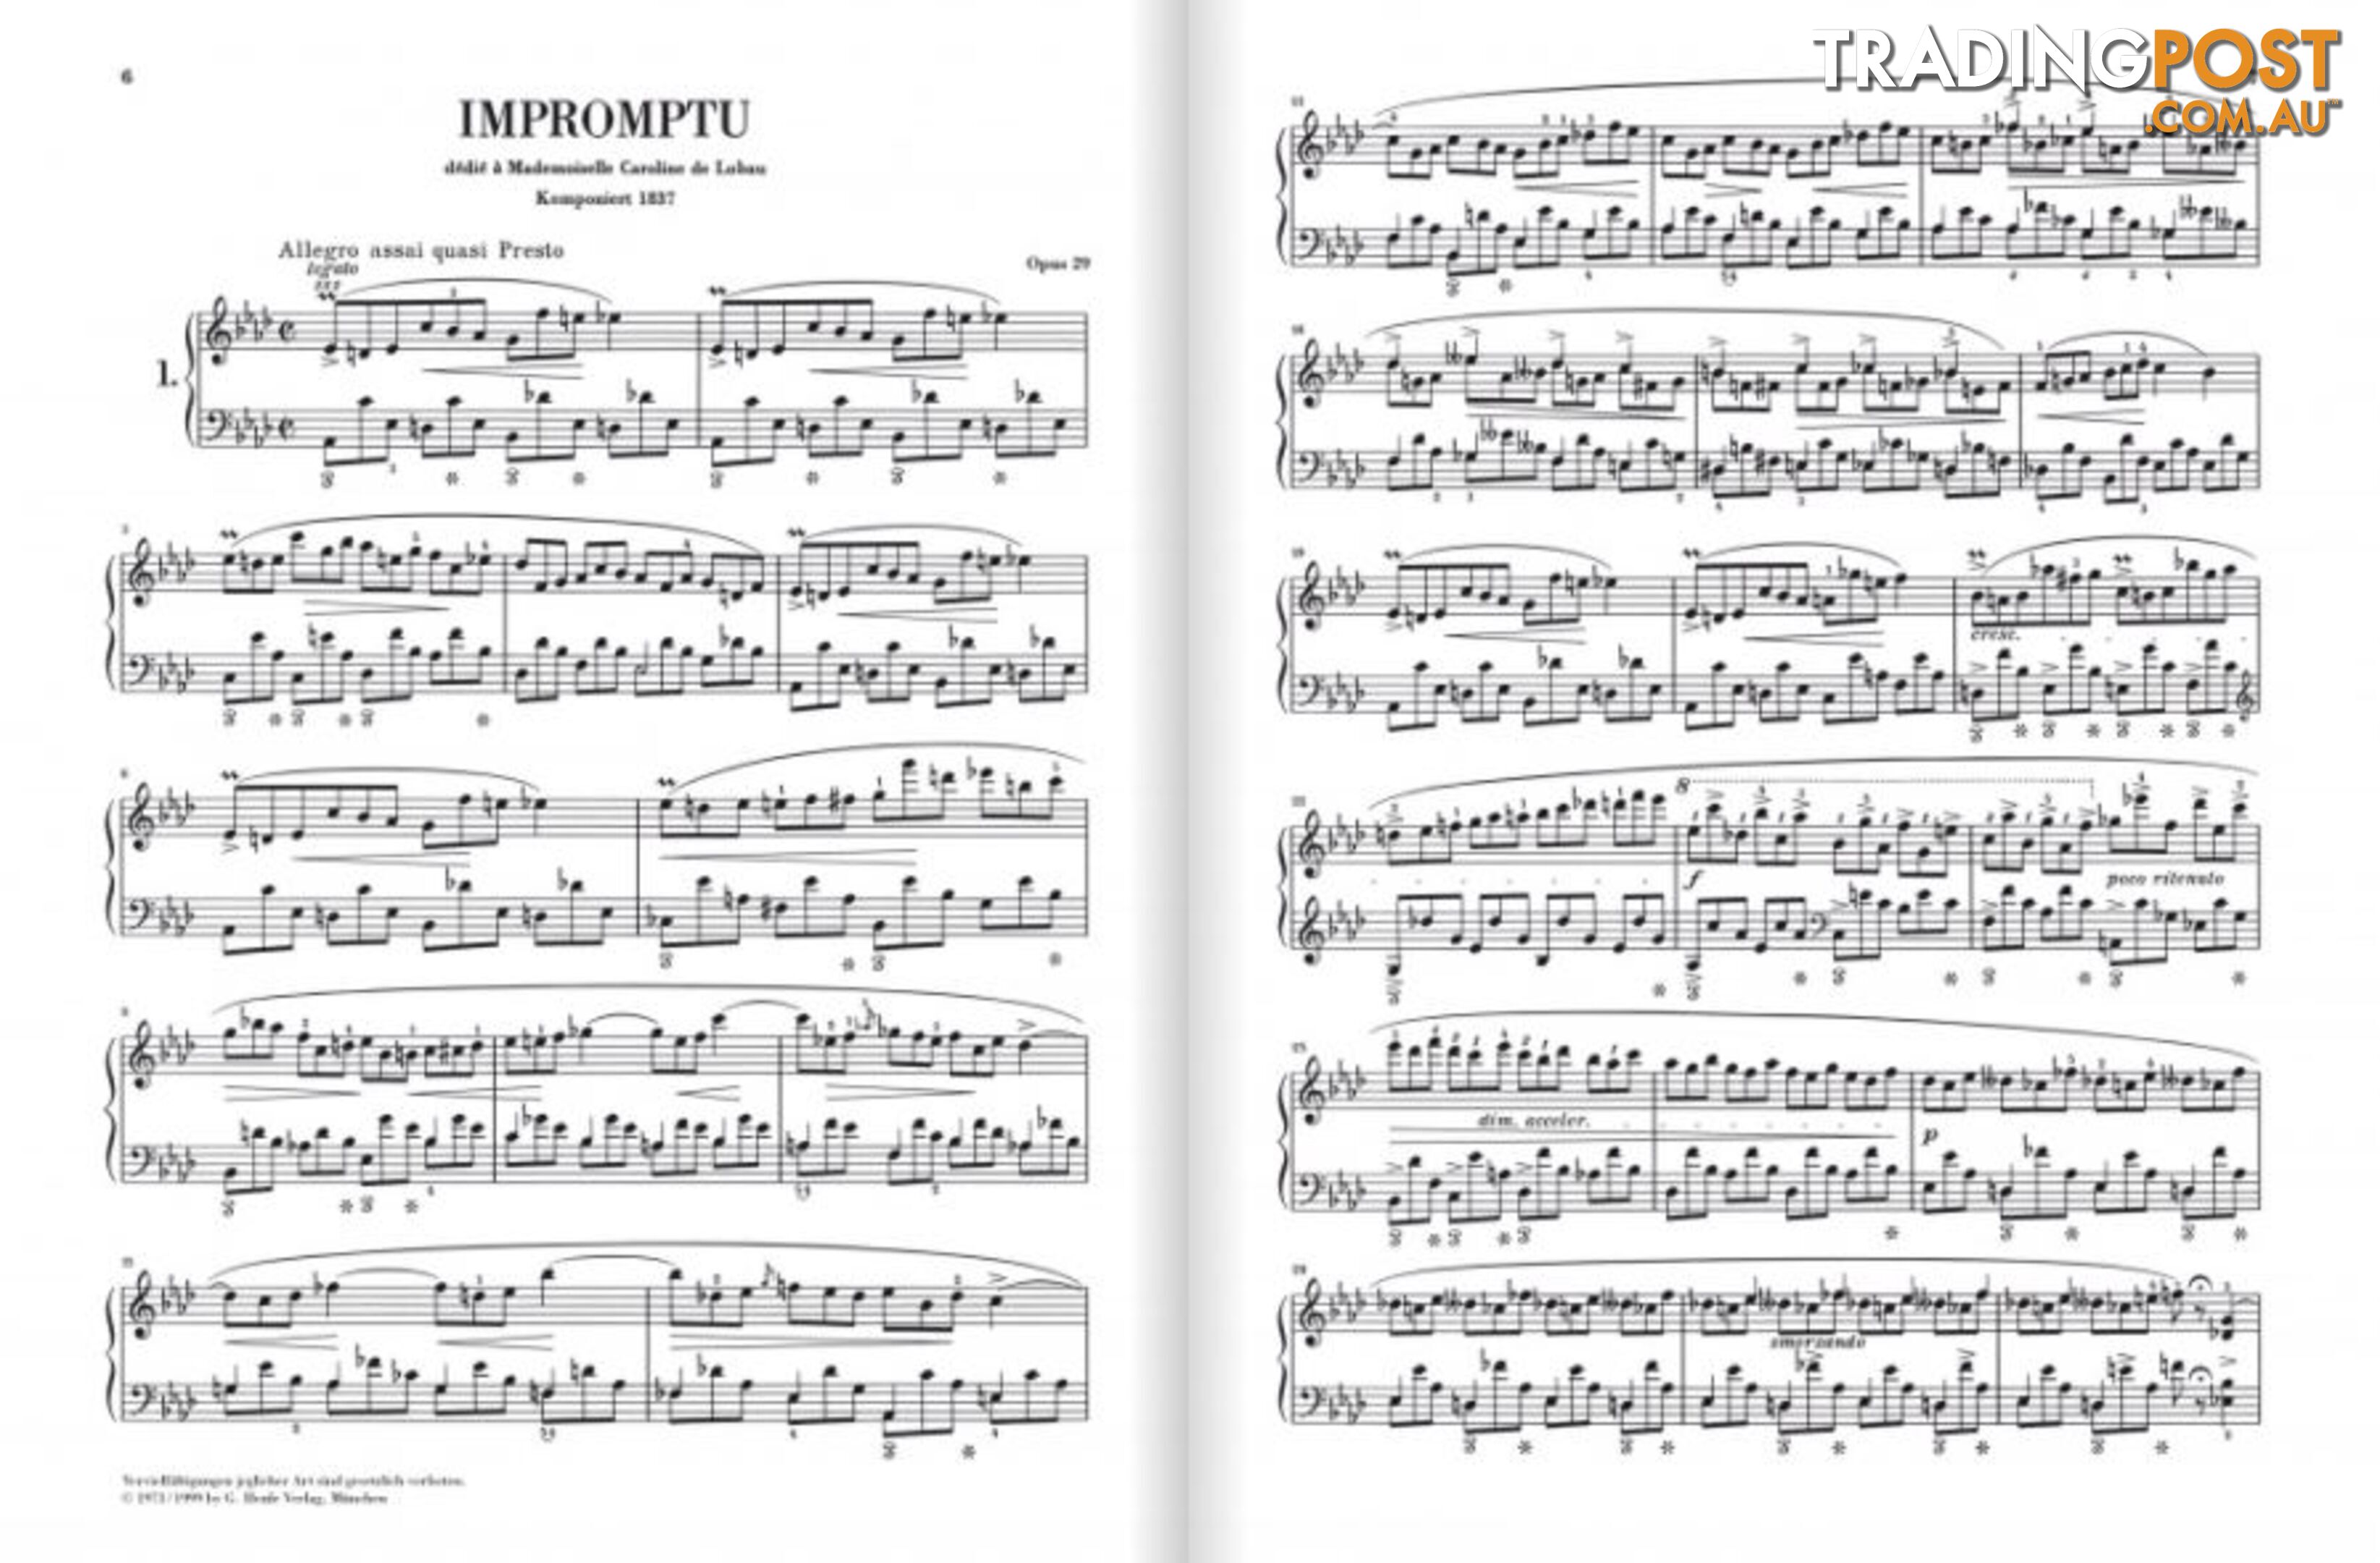 Chopin - Impromptus